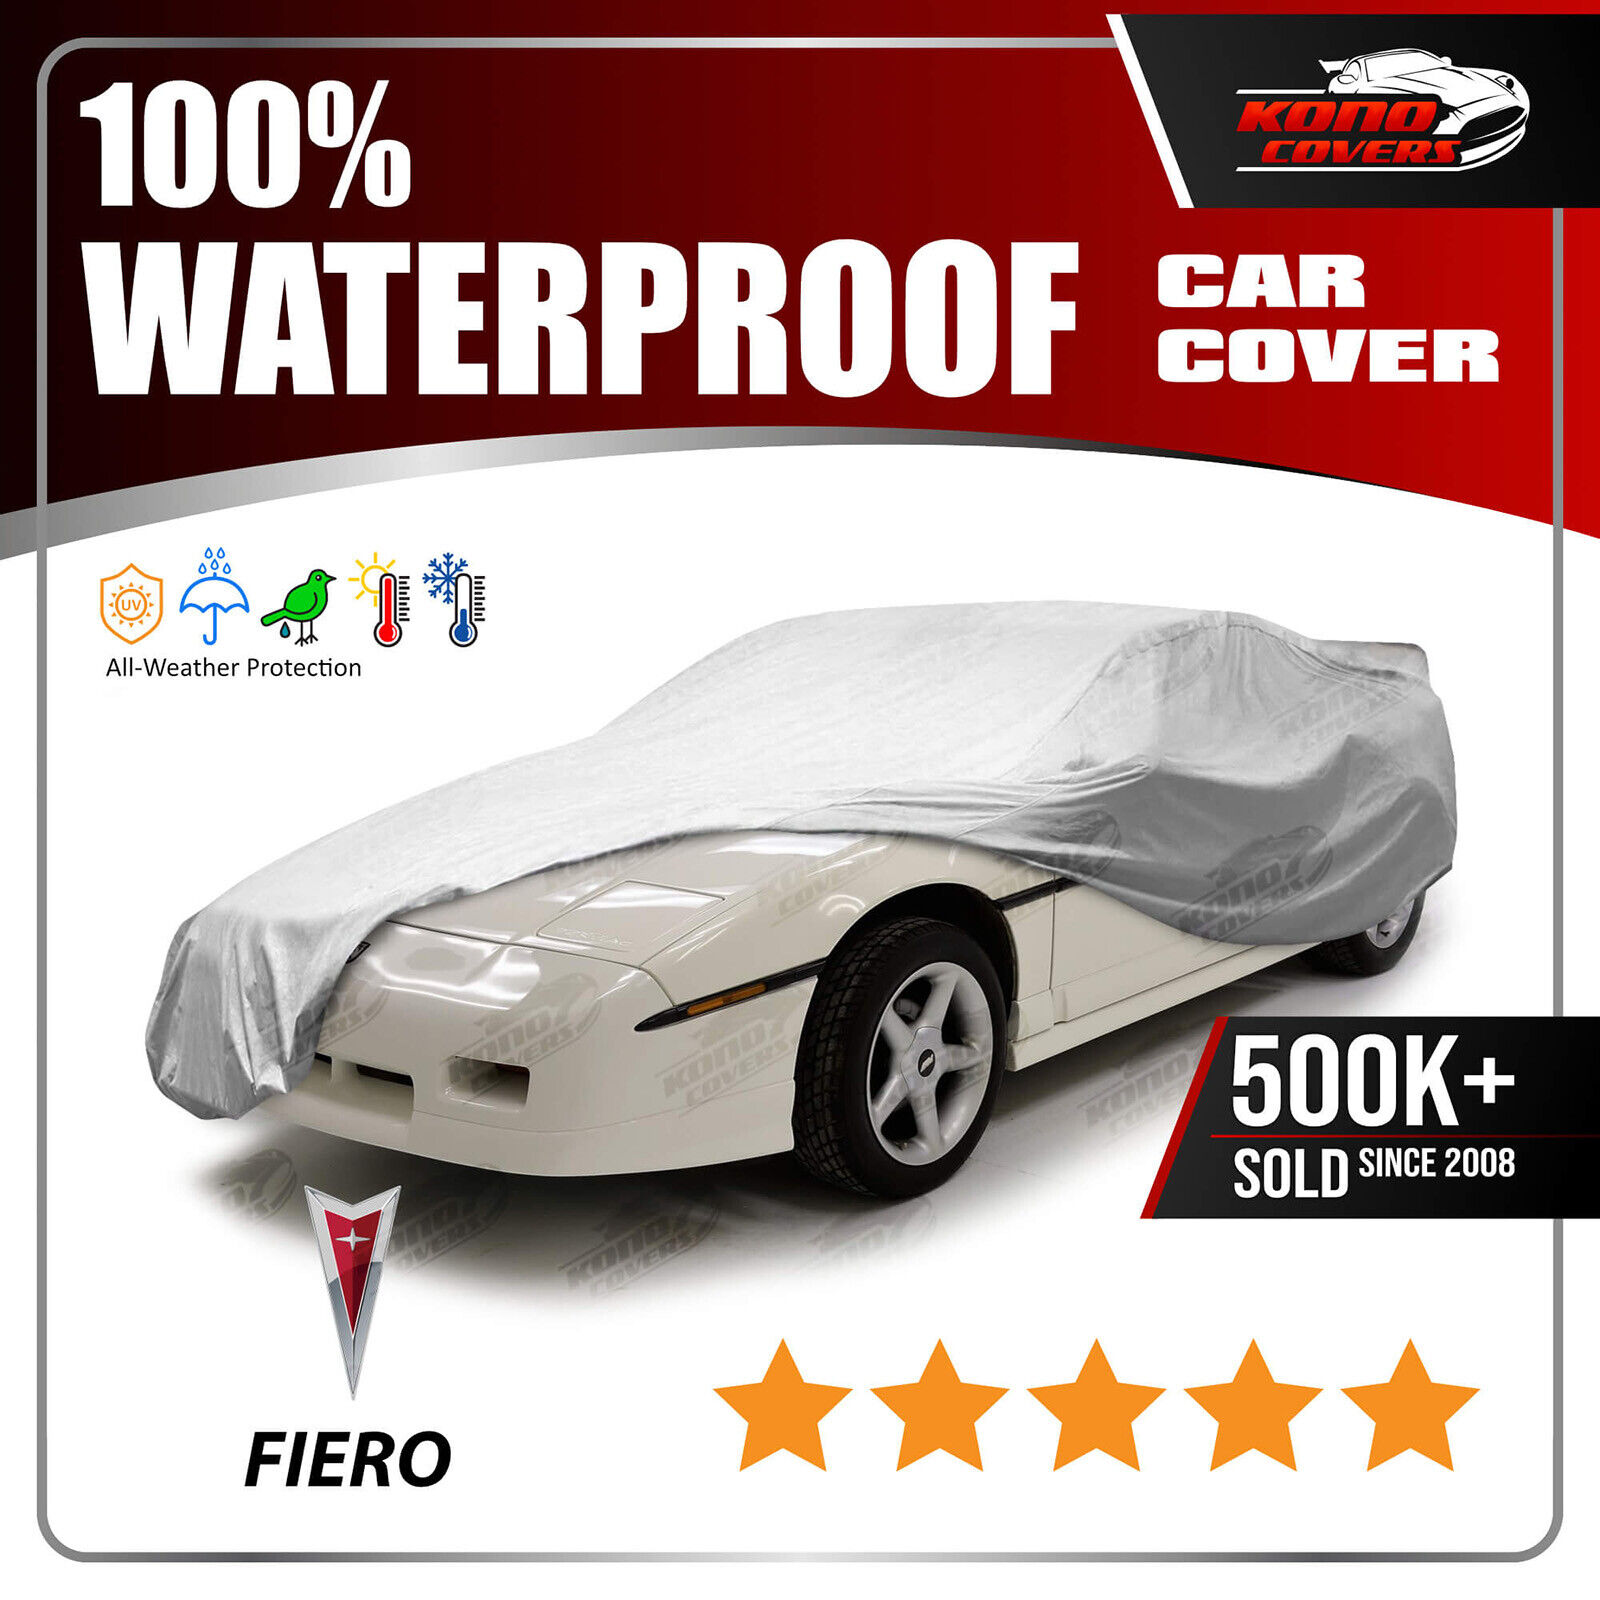 PONTIAC FIERO Notchback 1984-1988 CAR COVER - 100% Waterproof 100% Breathable